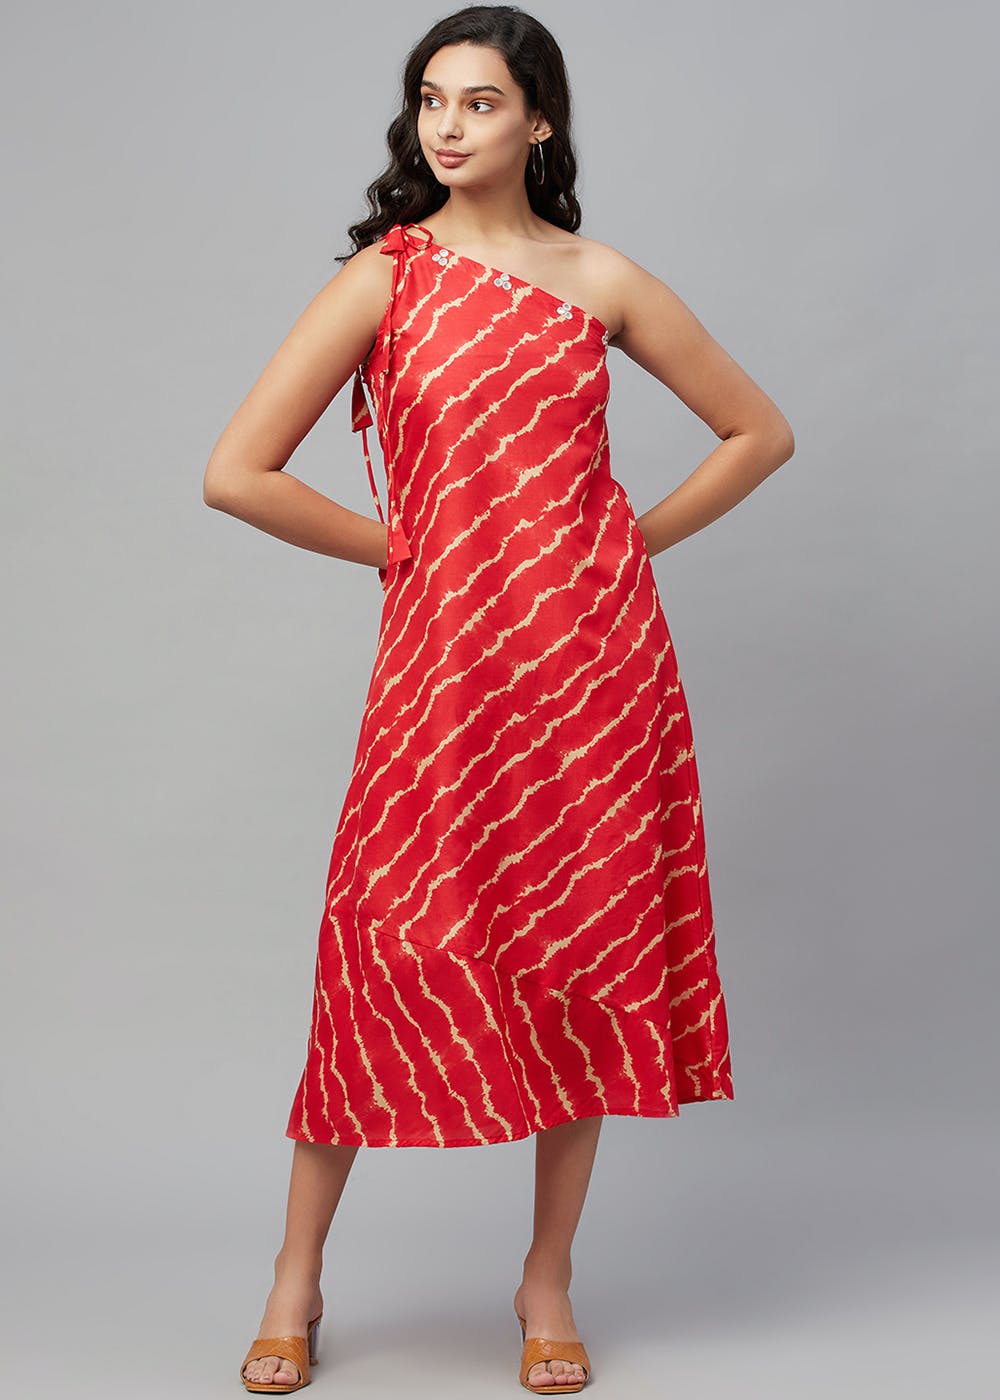 Get Red Silk Blend Printed Sleeveless Dress At ₹ 1009 Lbb Shop